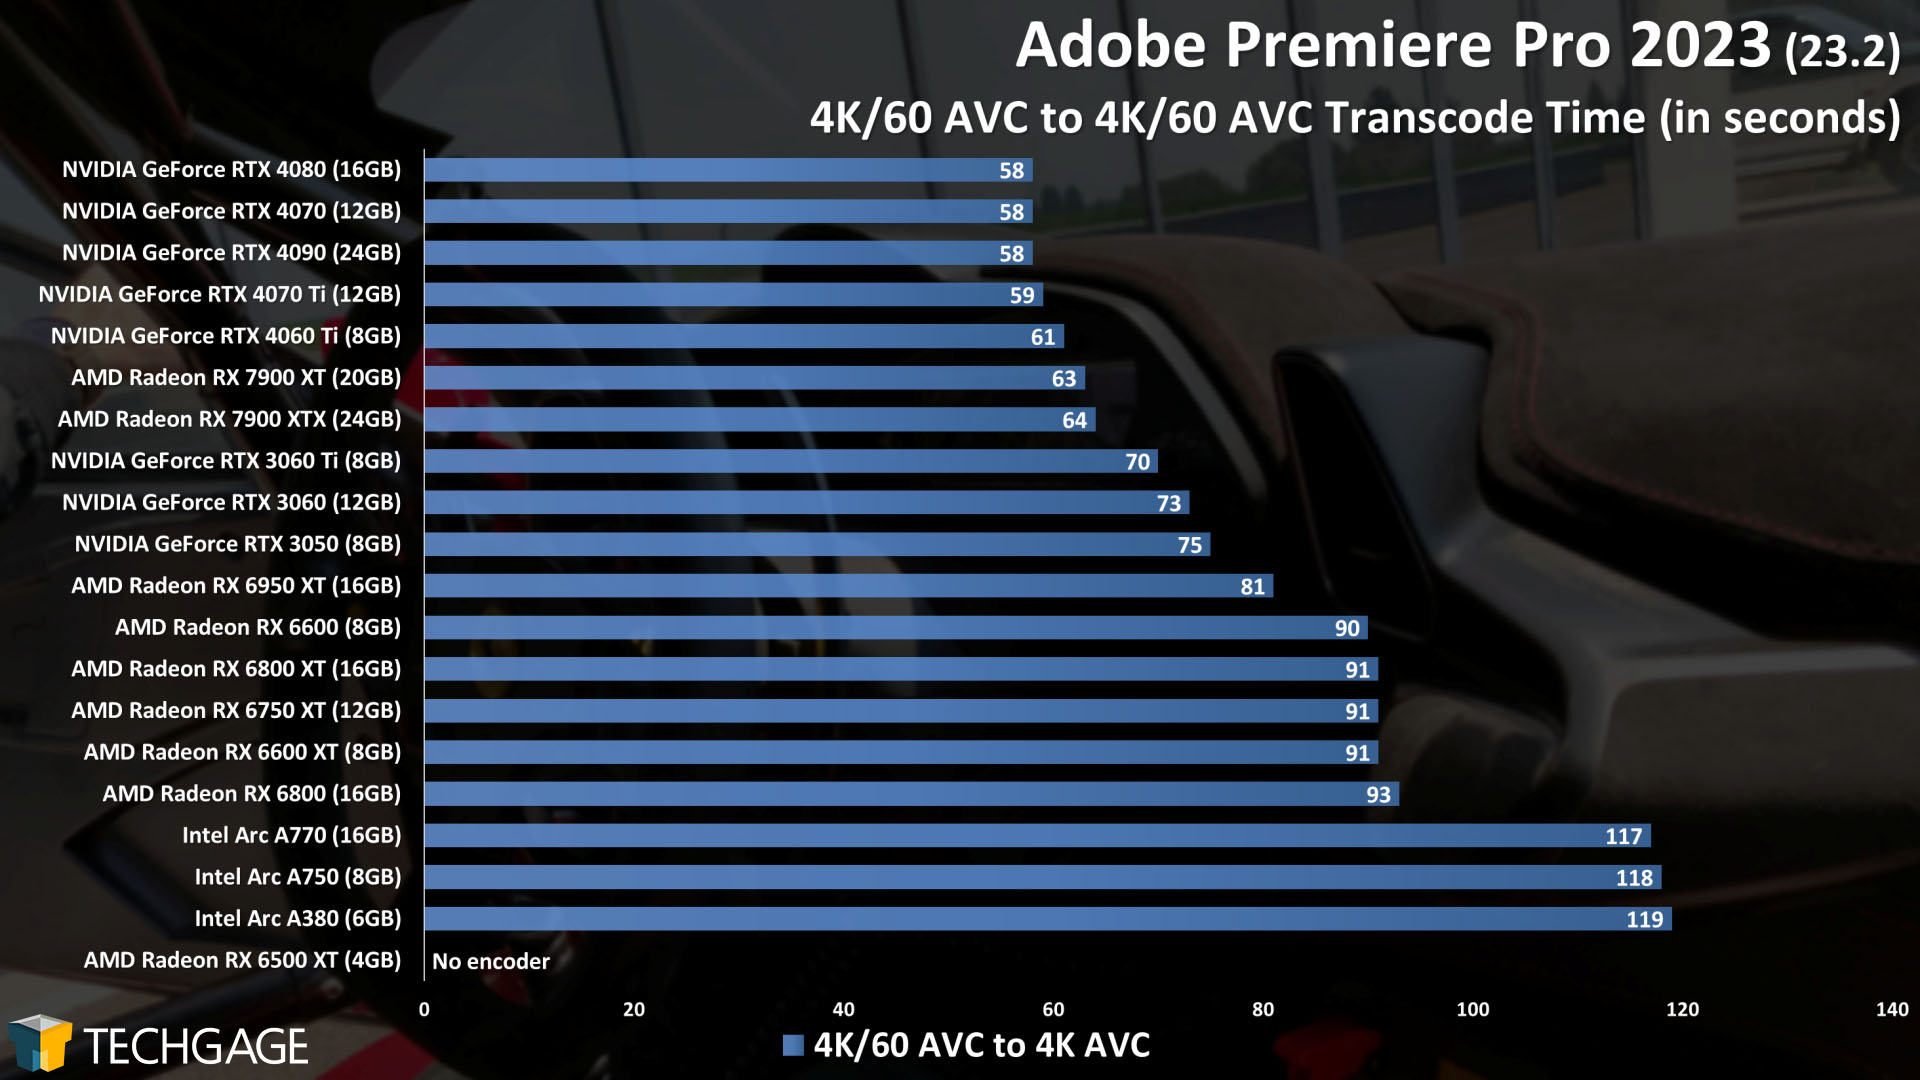 Adobe Premiere Pro - GPU Encoding Performance (4K60 AVC to 4K60 AVC)